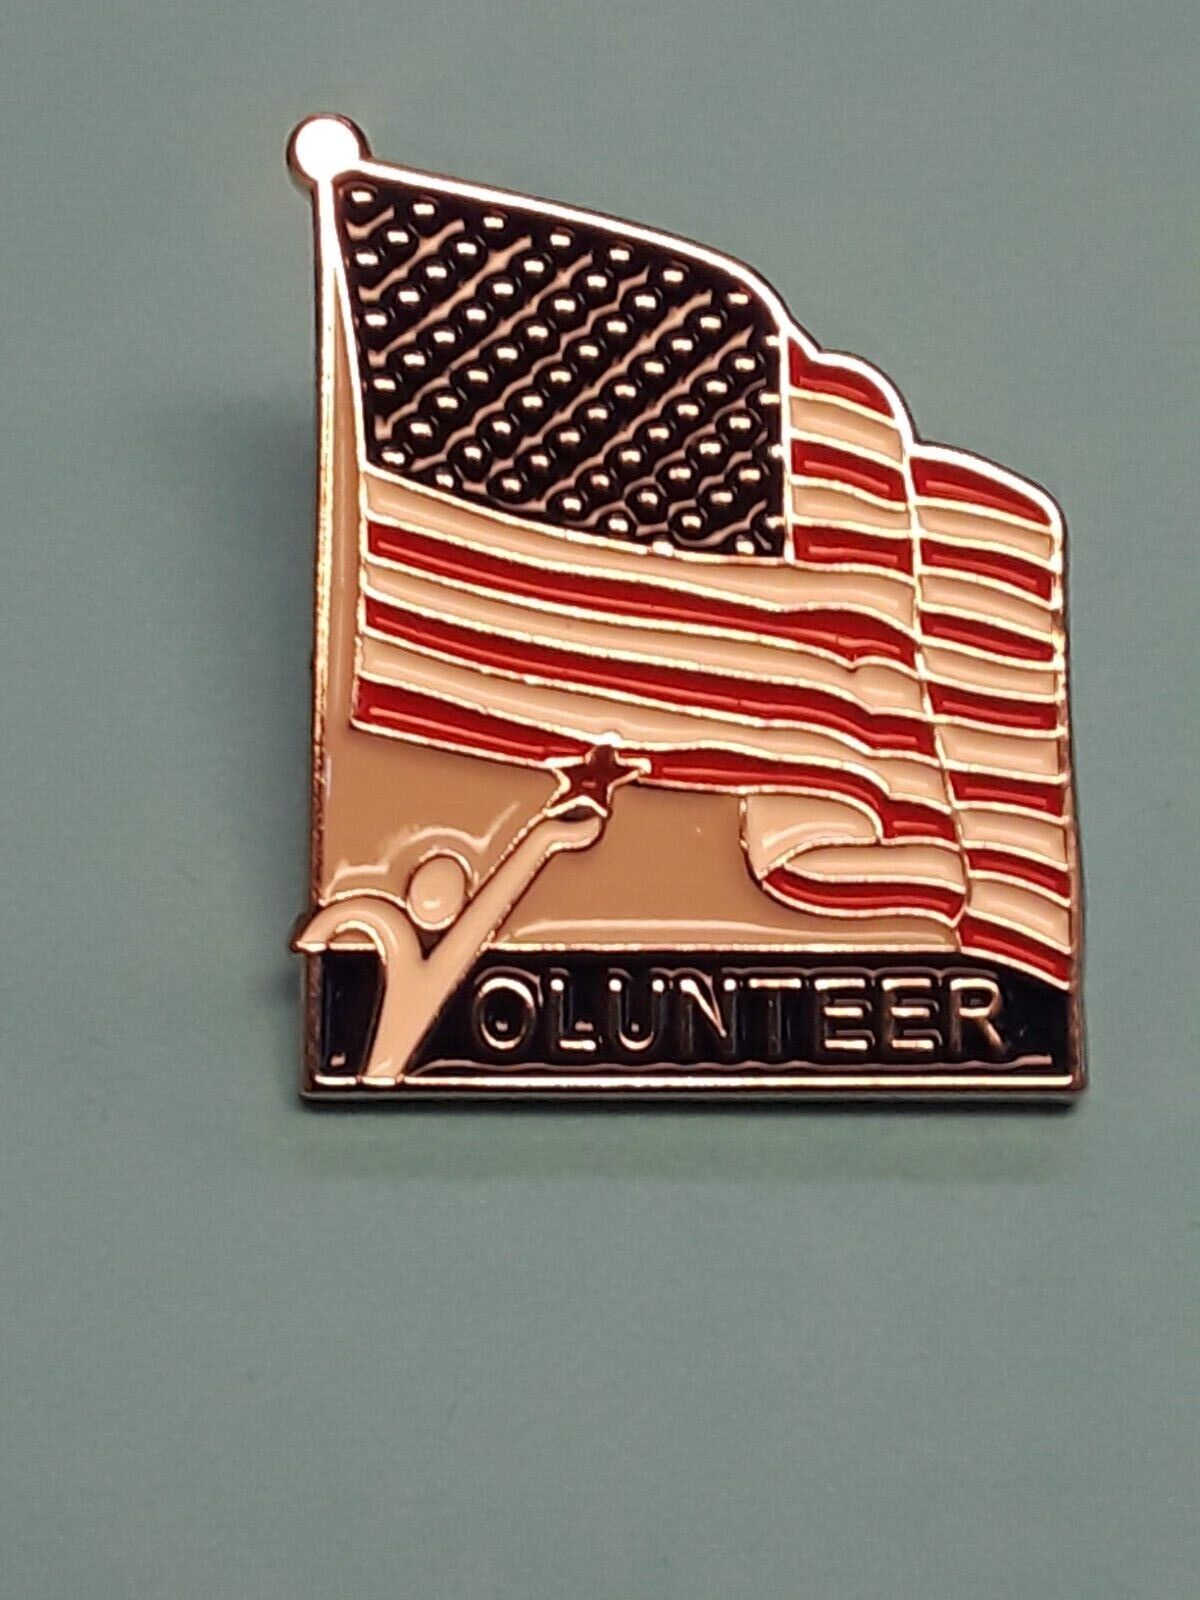 VA (Veterans Affairs)  Voluntary Service Pins 1.25 inch, bag of 100